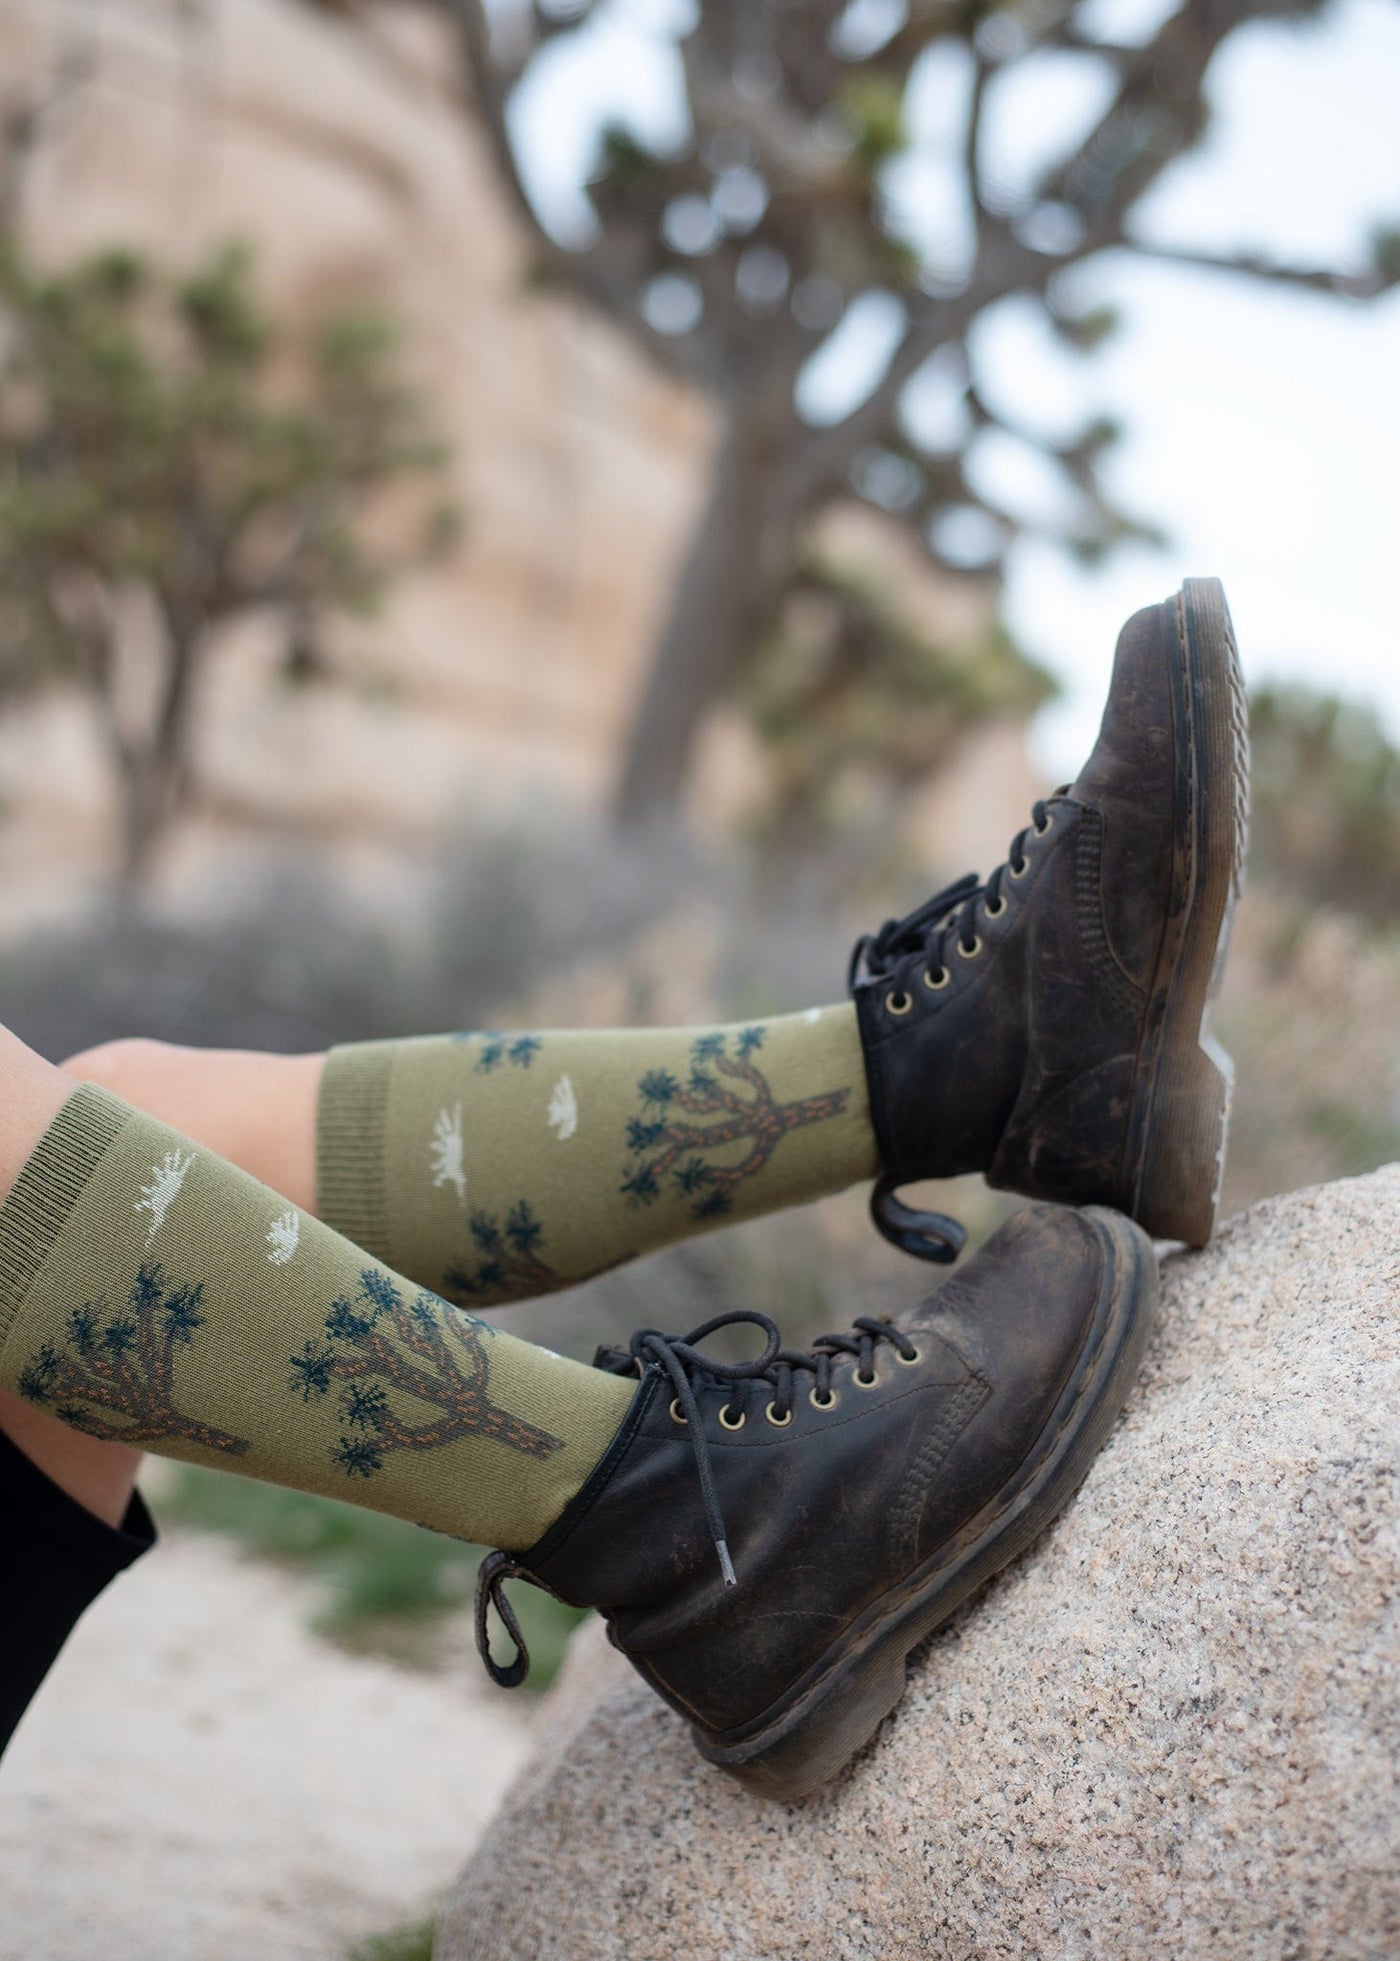 Zkano Crew Joshua Tree - Organic Cotton Crew Socks - Peat organic-socks-made-in-usa